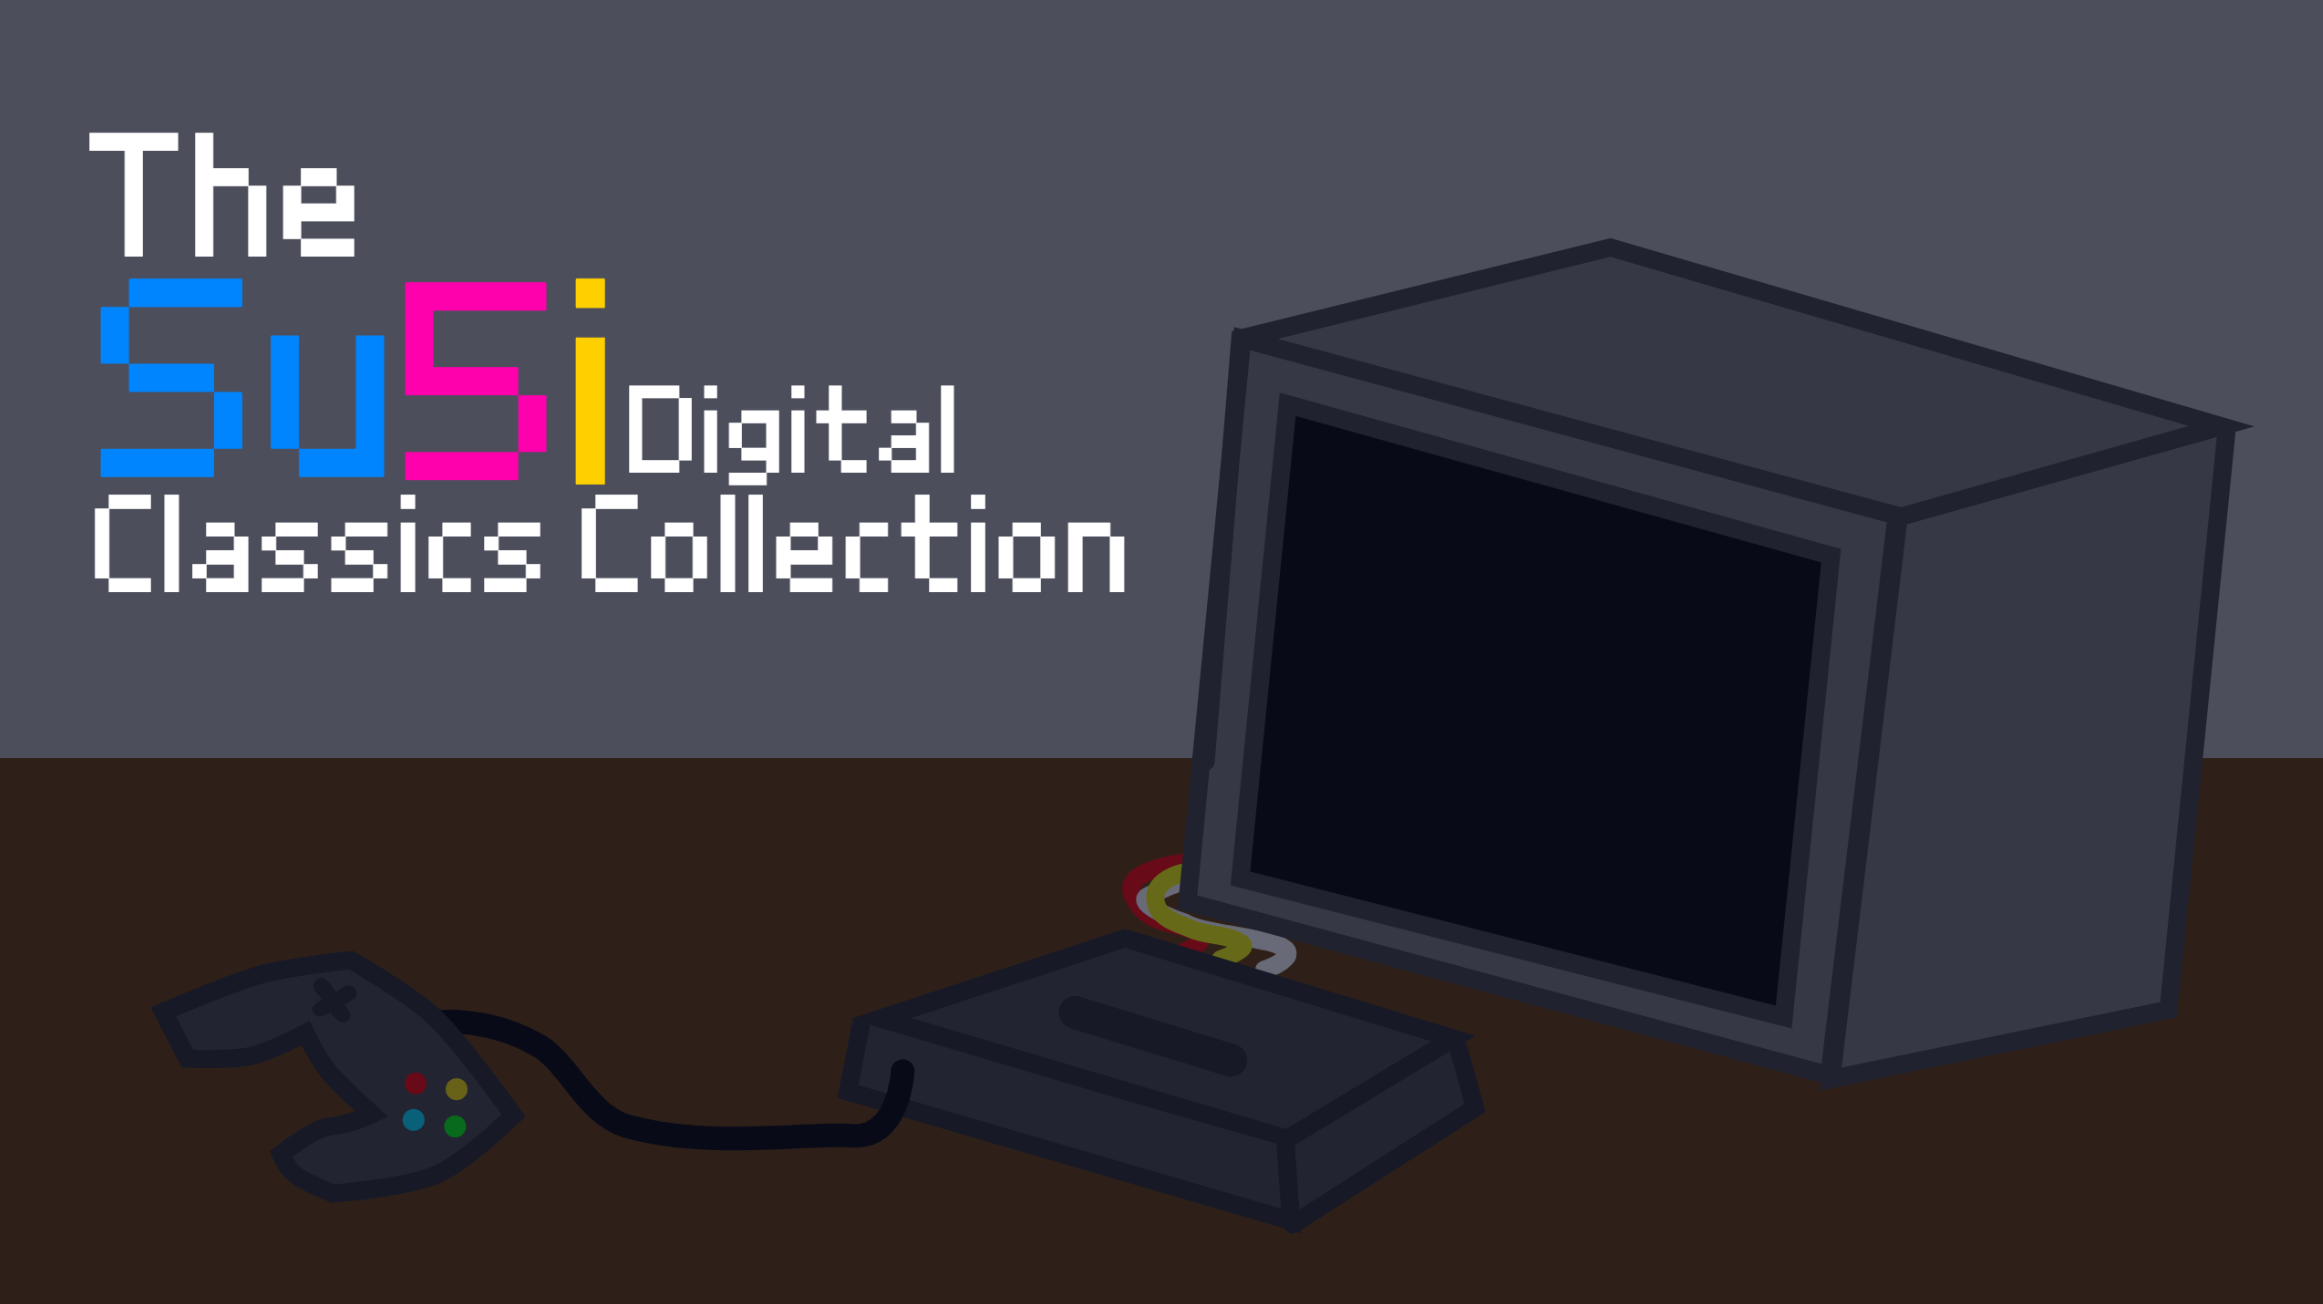 The Su5i Digital Classics Collection